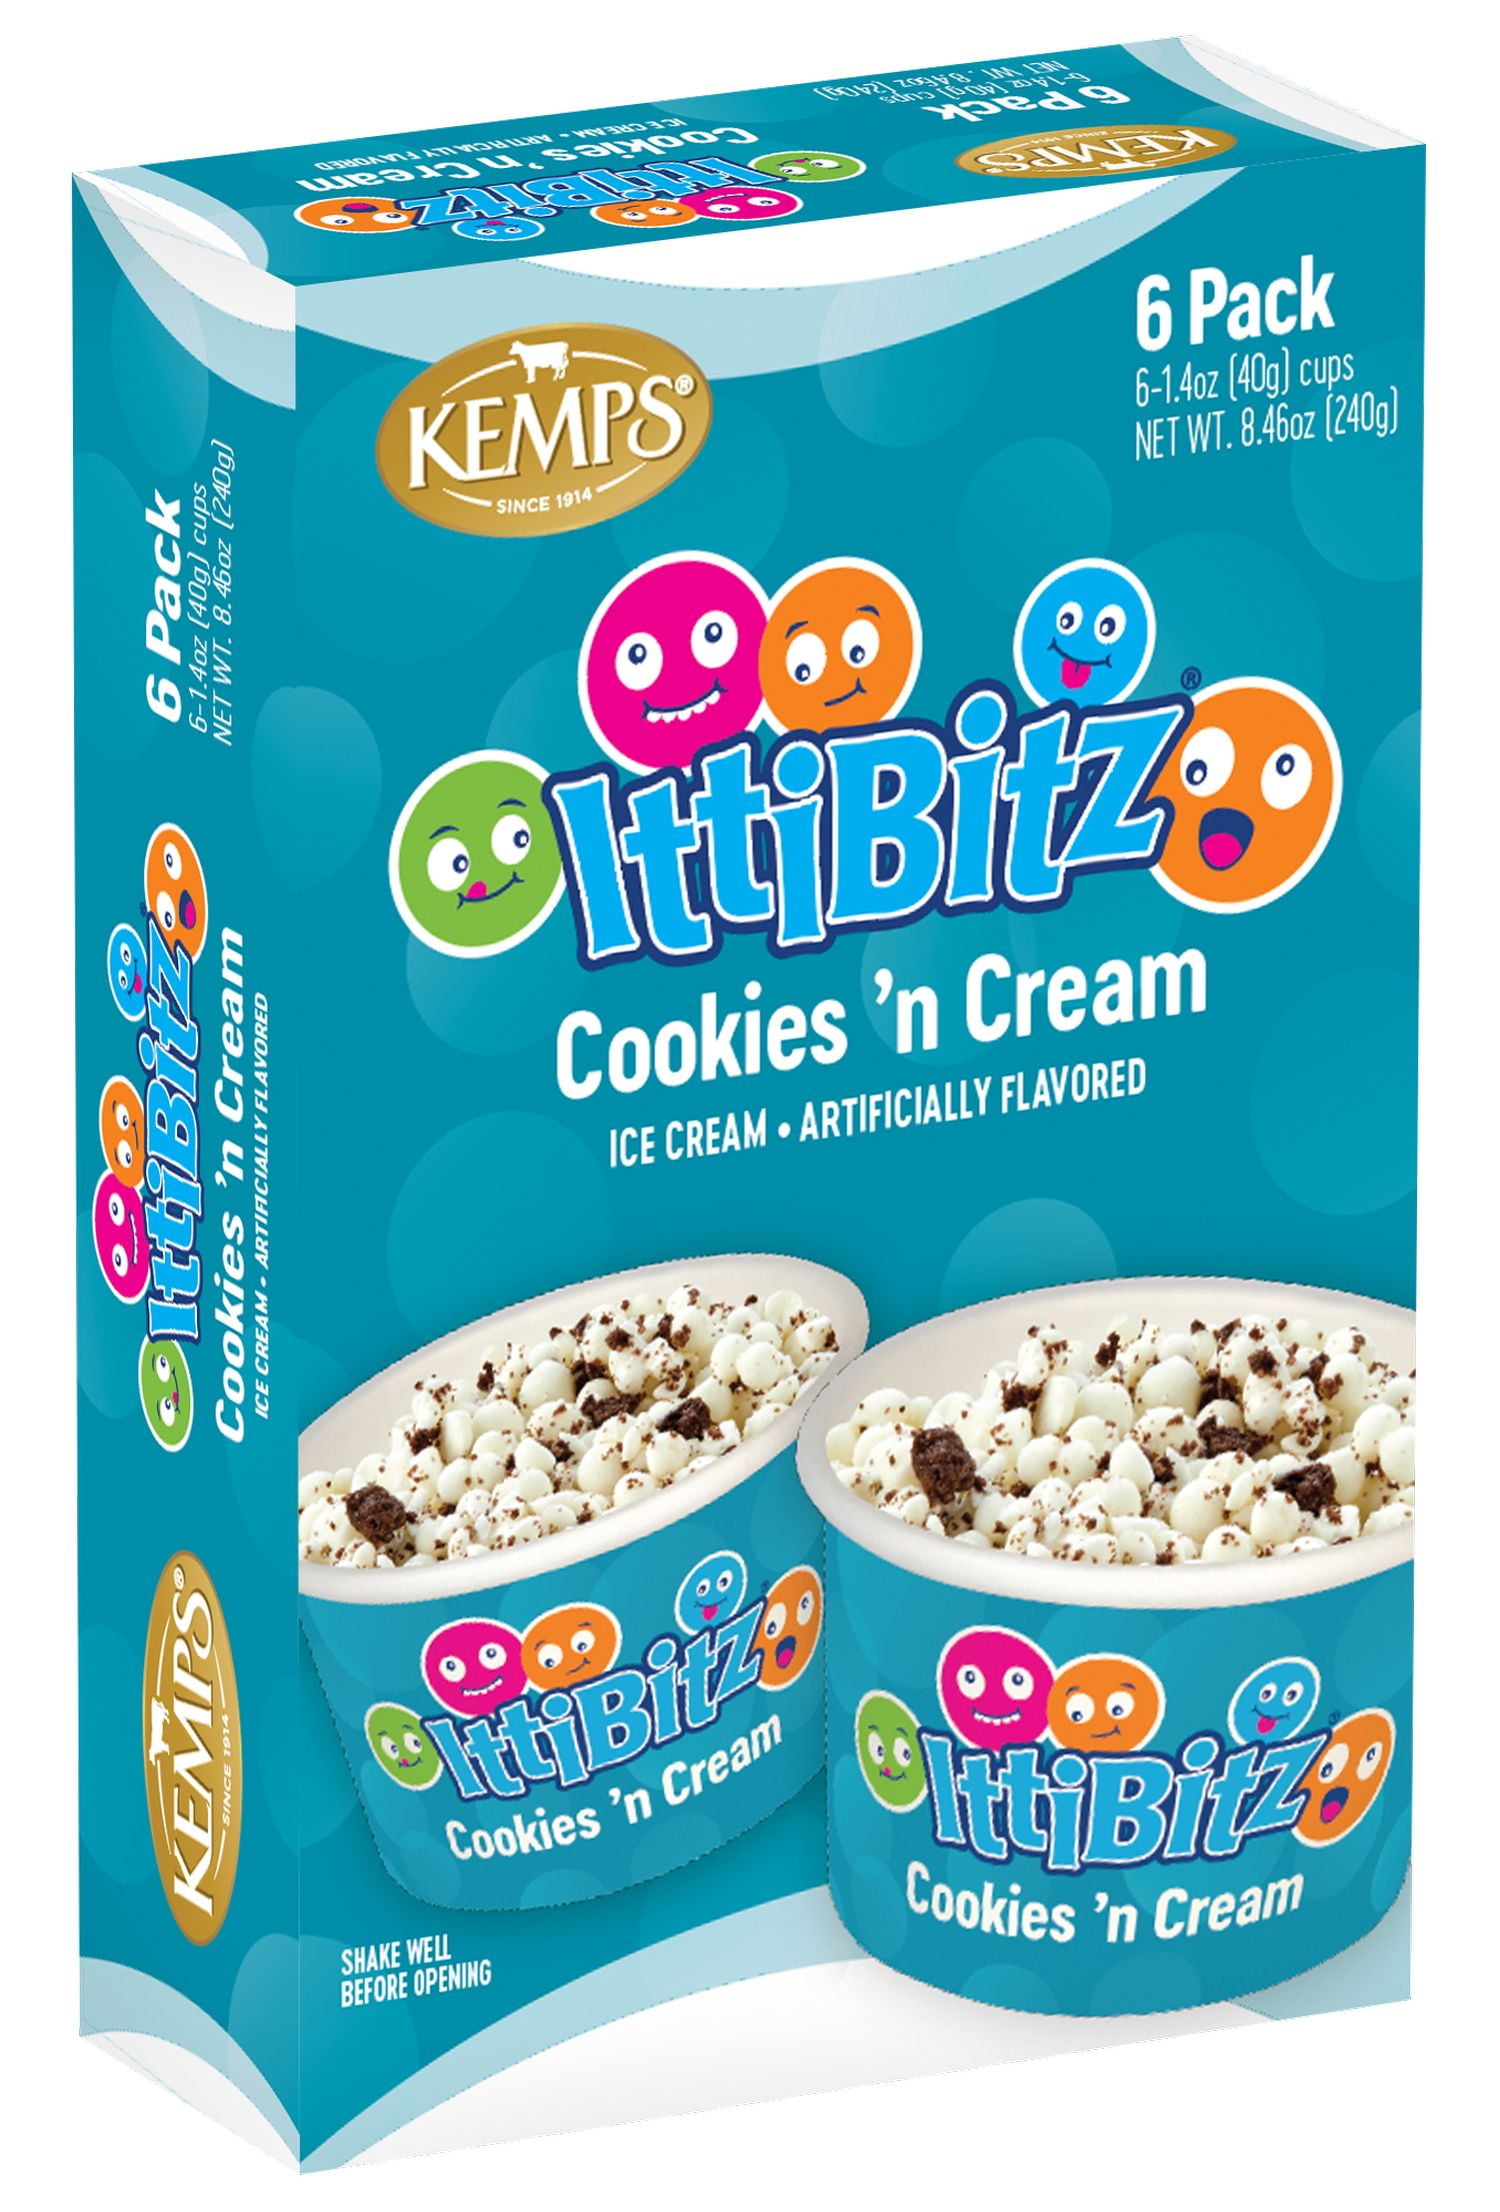 Kemps IttiBitz Cookies N Cream 1.4 oz / 6 Pak